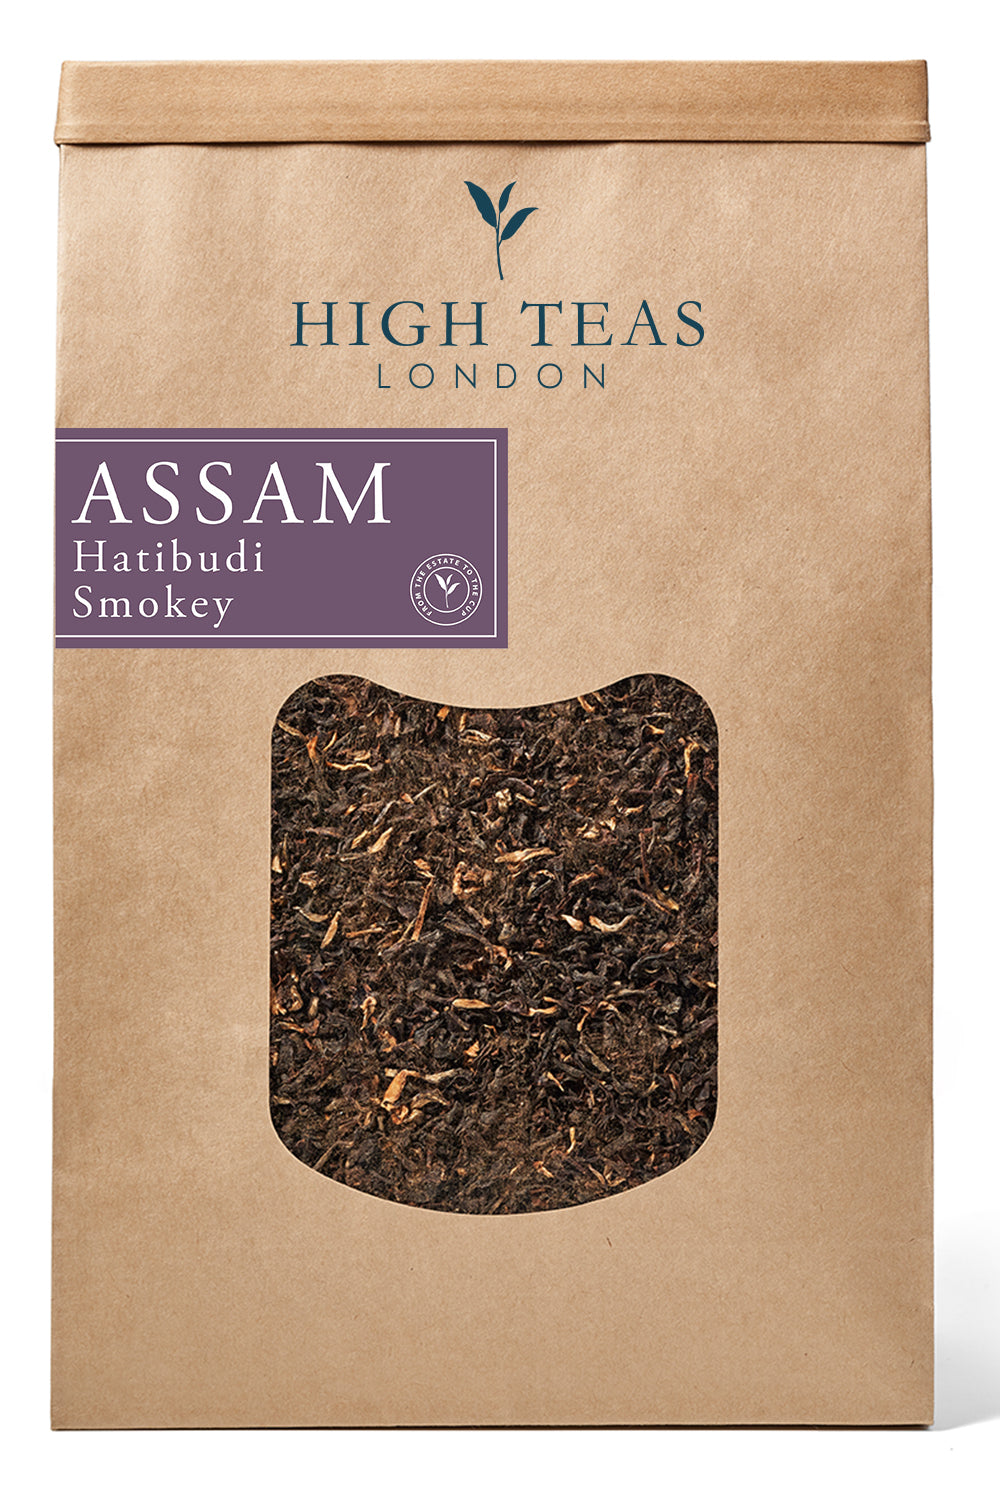 Assam Hatibudi Smoky-500g-Loose Leaf Tea-High Teas